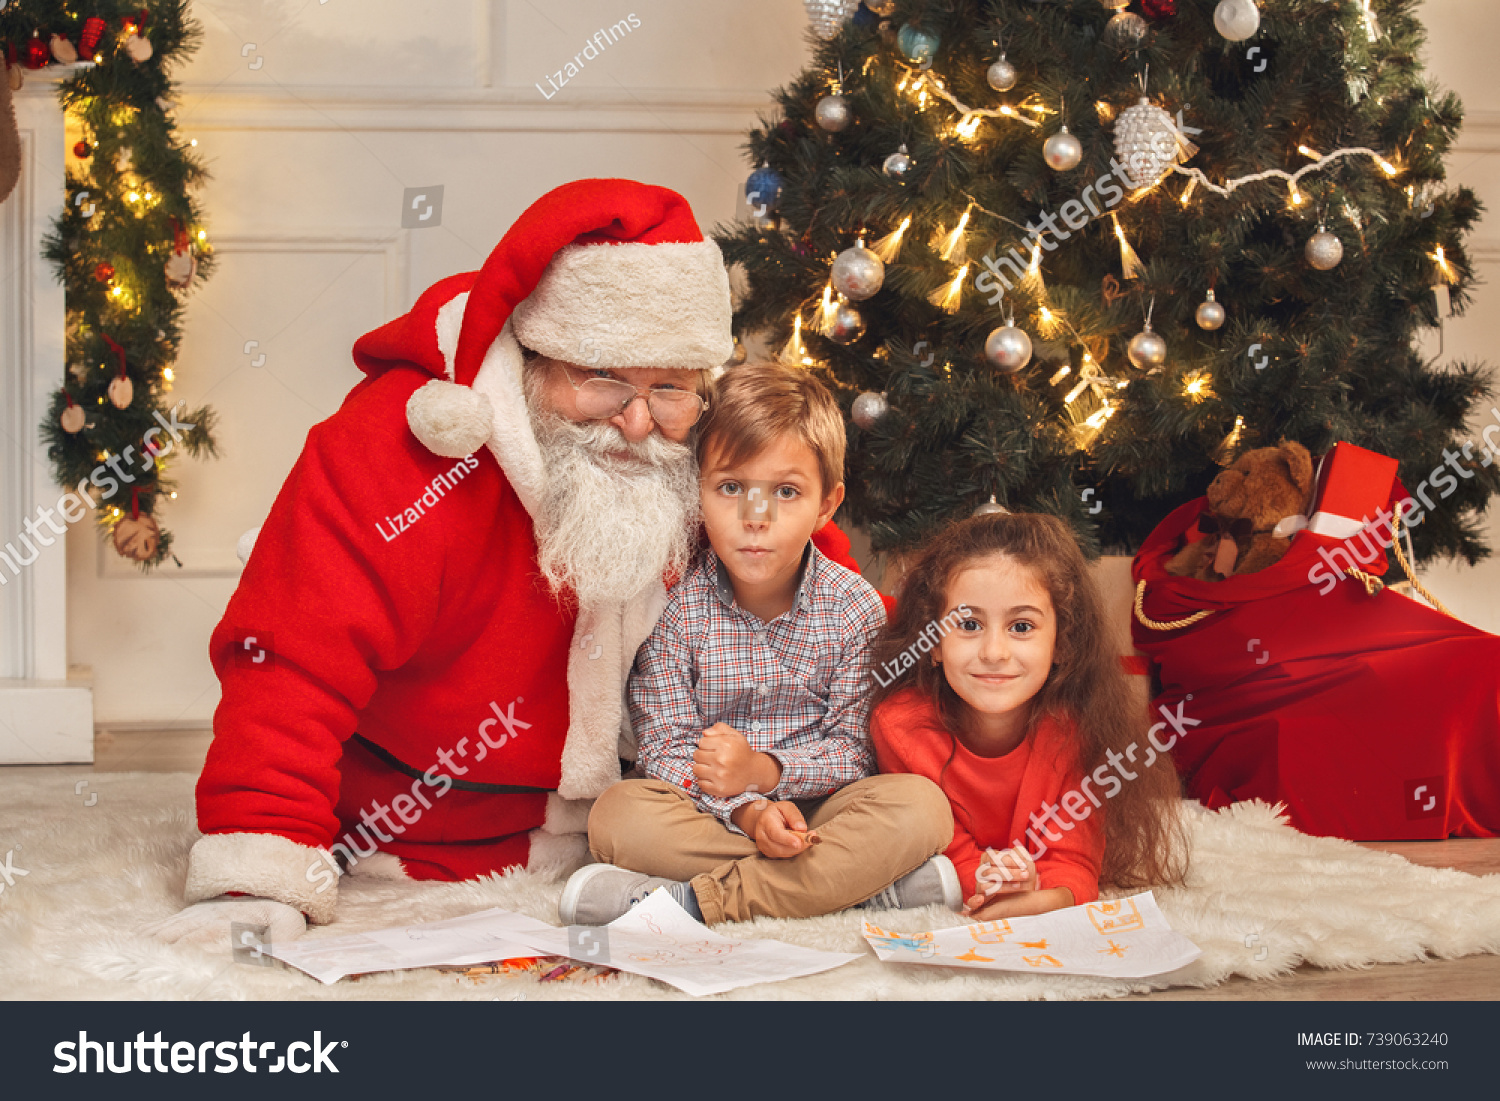 Santa Claus Kids Indoors Christmas Celebration Stock Photo Edit Now 739063240